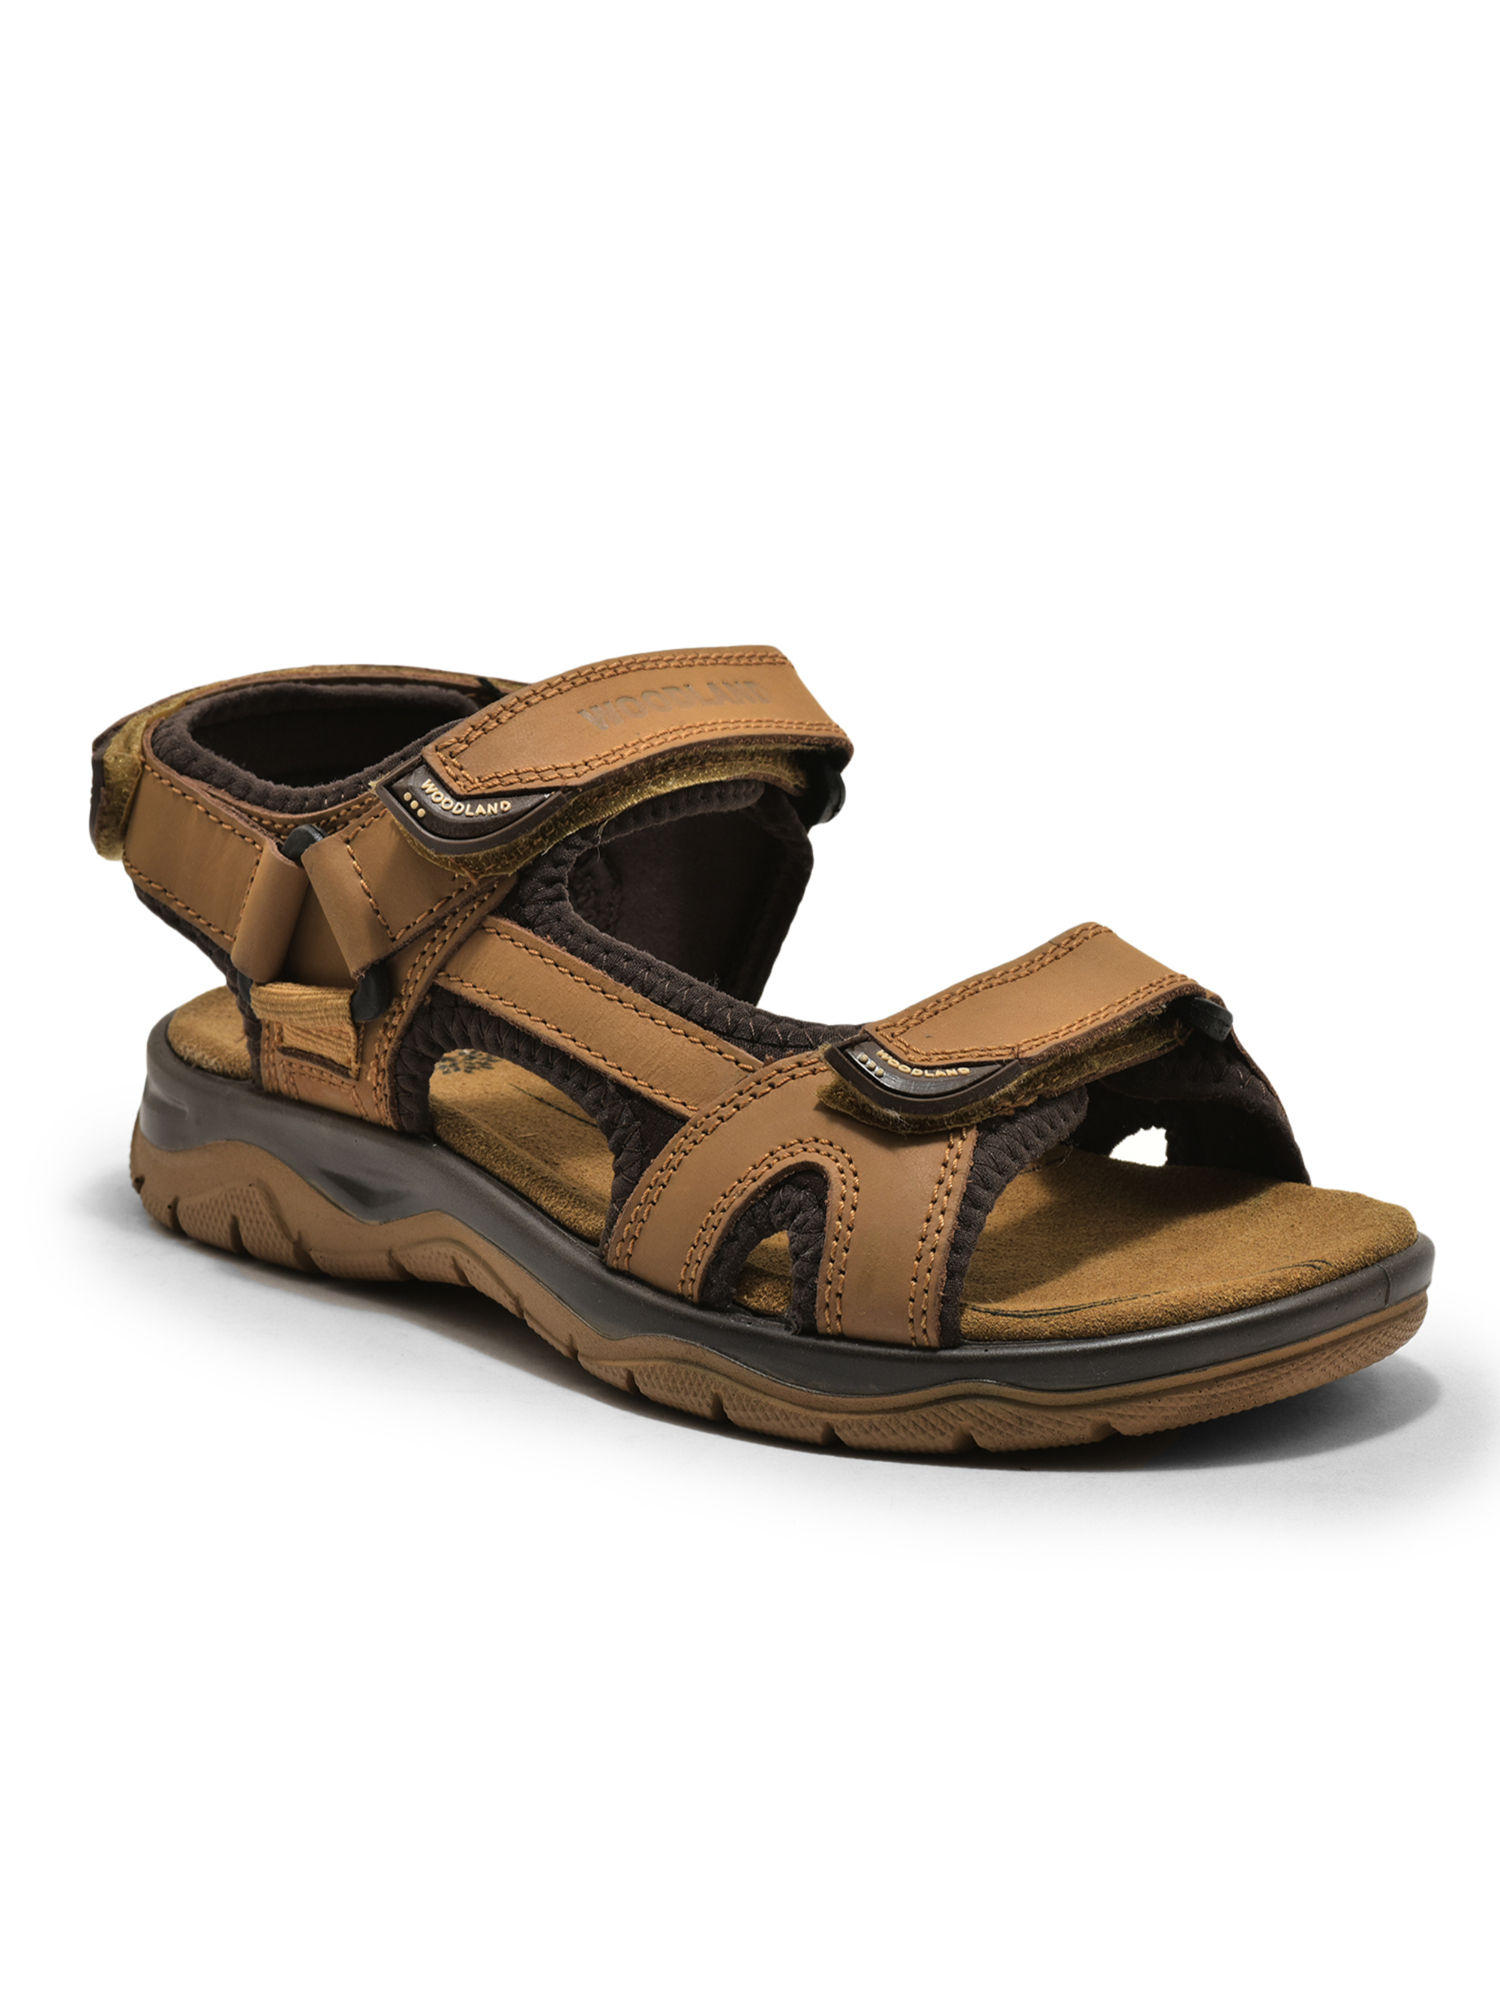 Woodland mens GD 2662117NW CAMEL Sport Sandal - 5 UK (39 EU) (GD 2662117NW)  : Amazon.in: Fashion